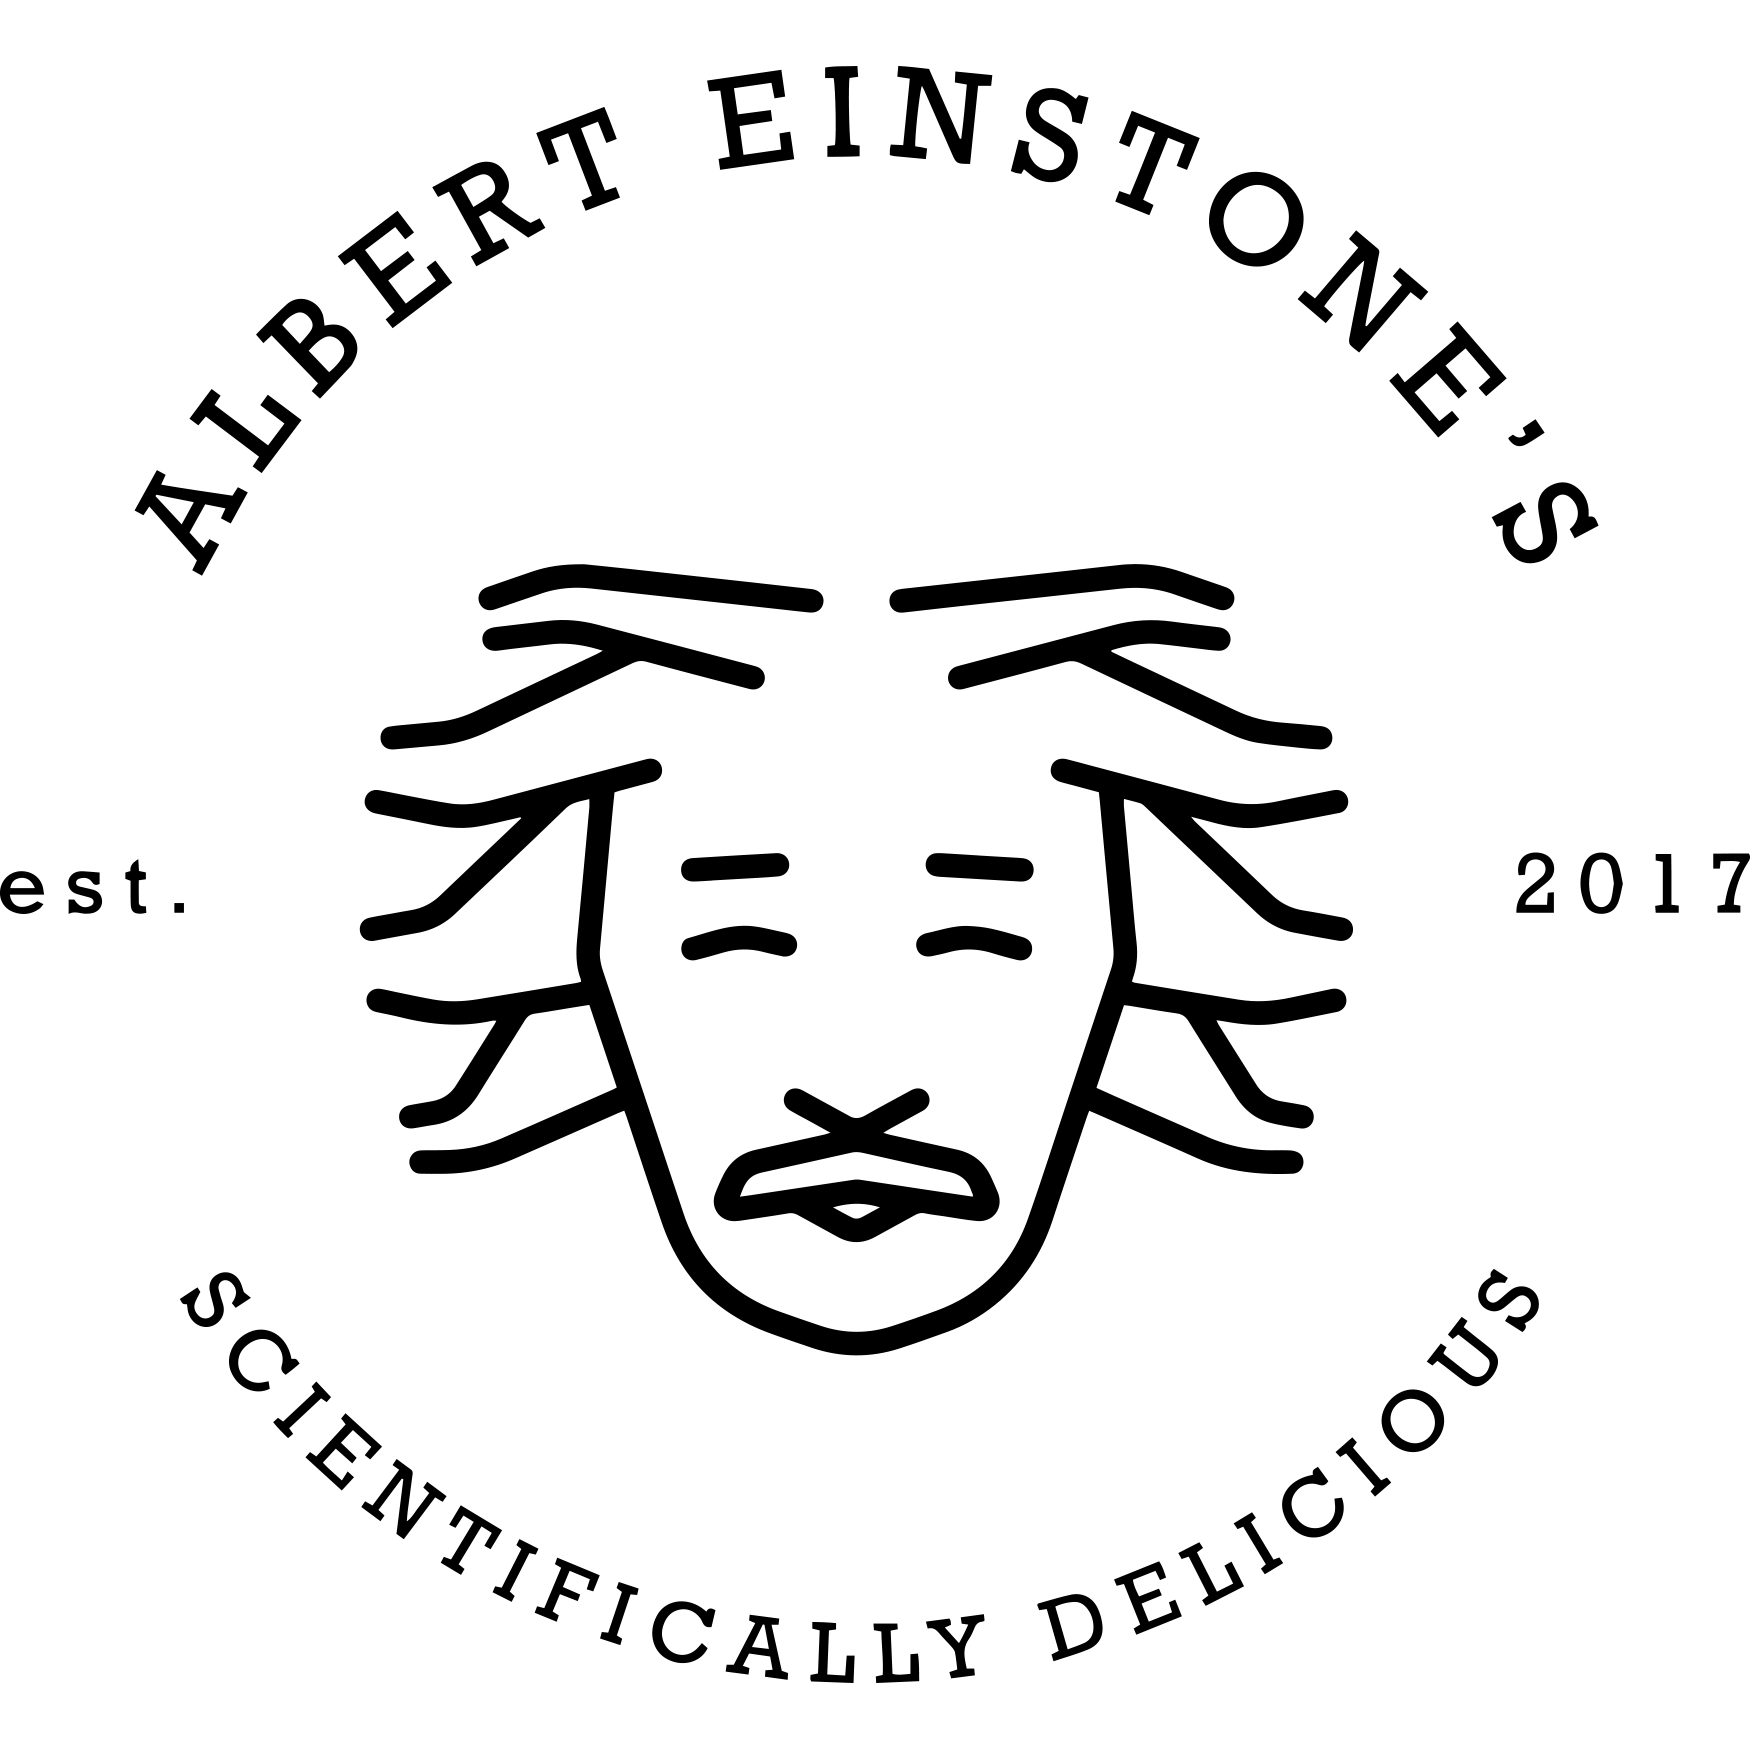 The logo of Albert Einstone's